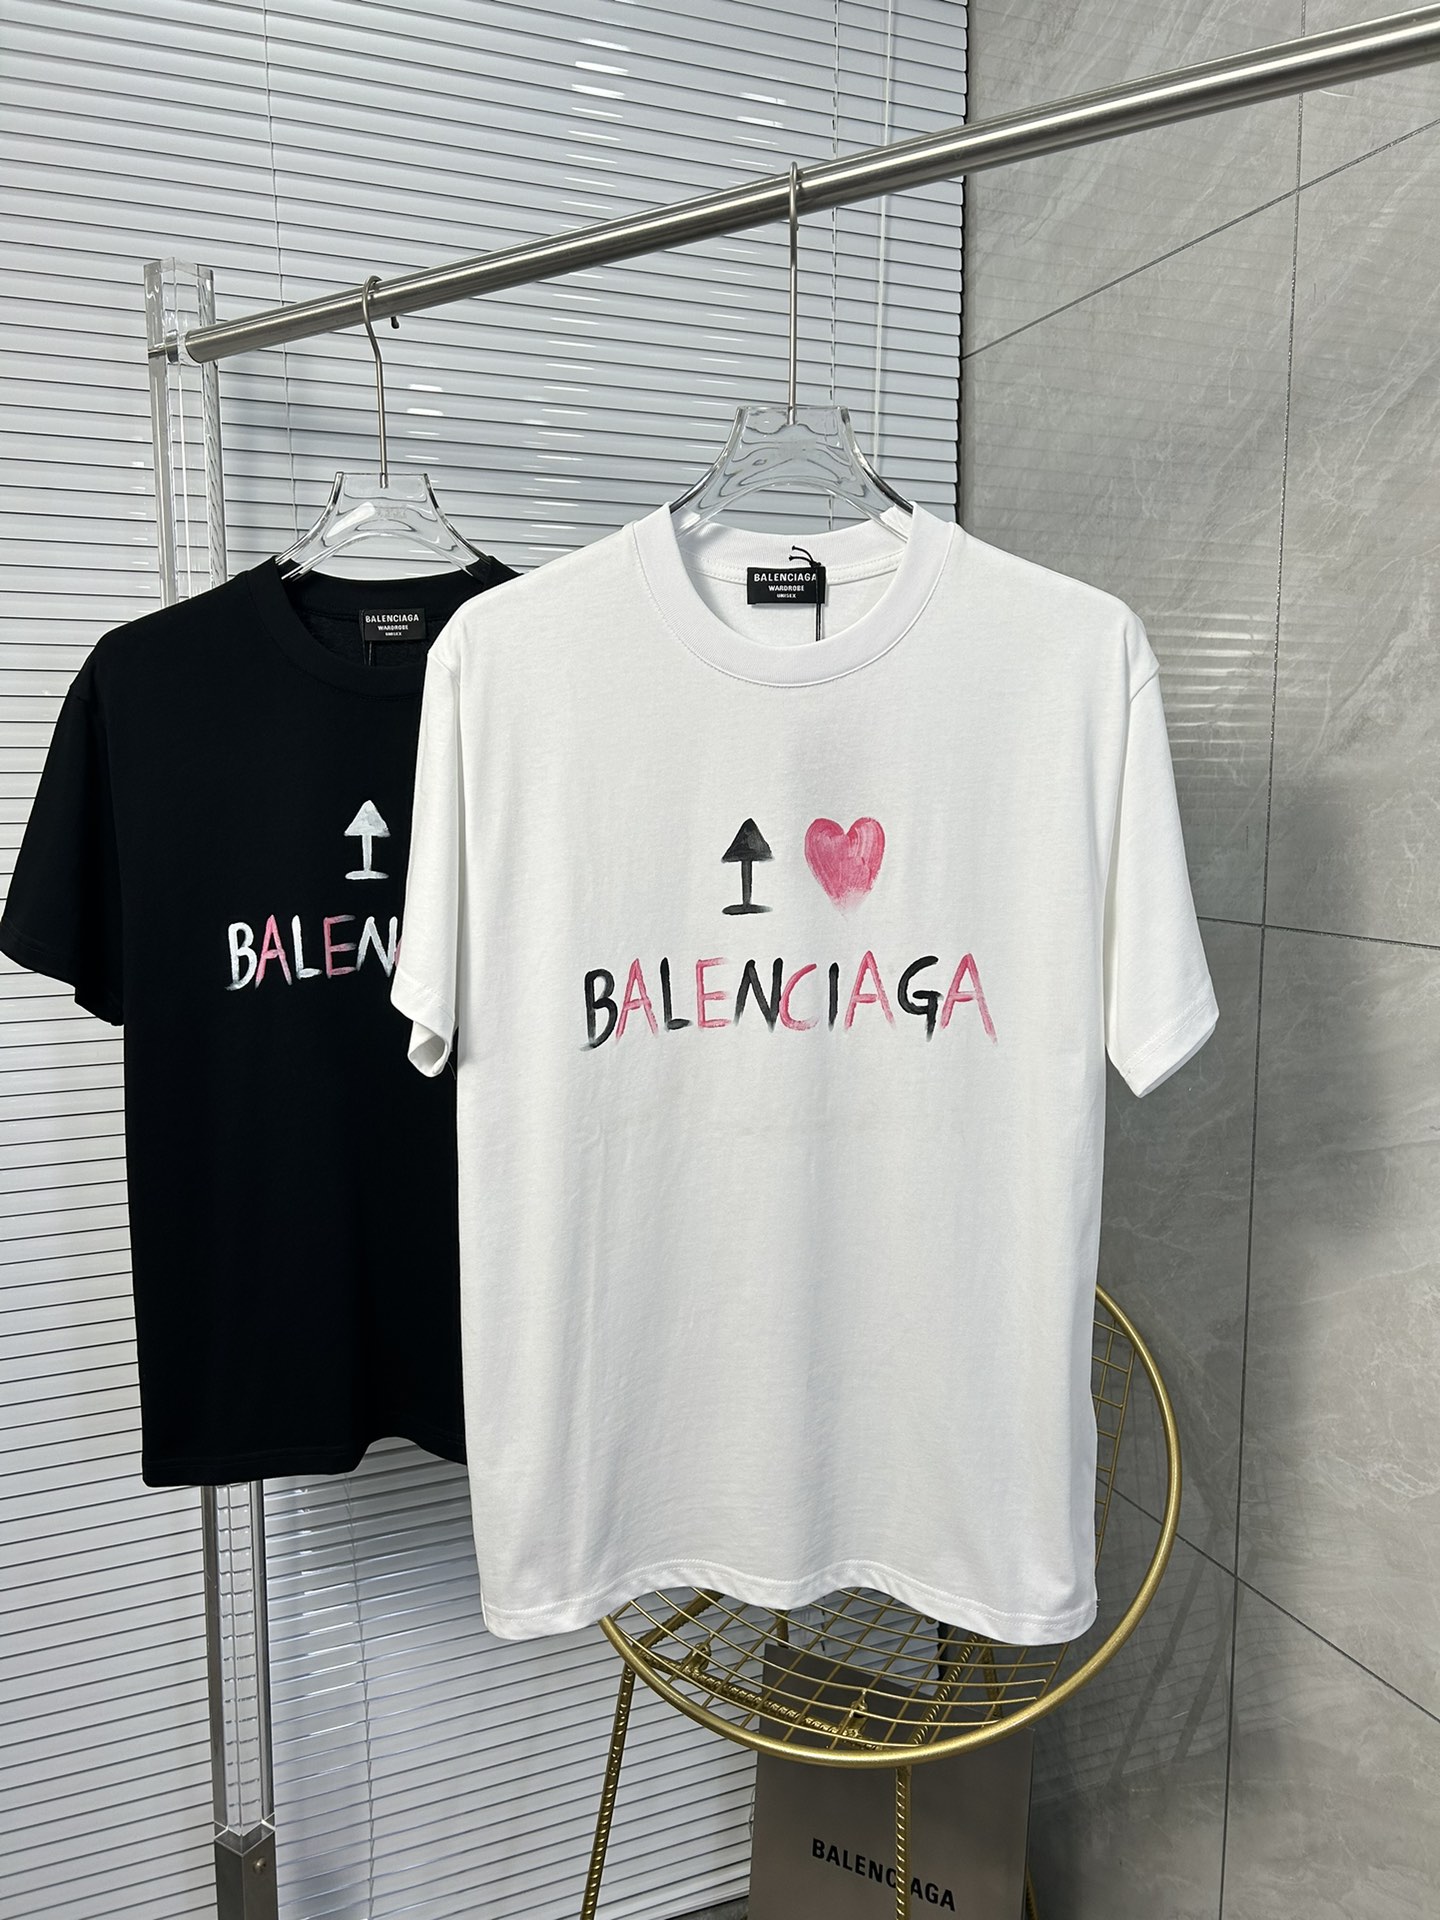 Balenciaga Clothing T-Shirt Black White Printing Unisex Cotton Fashion Short Sleeve